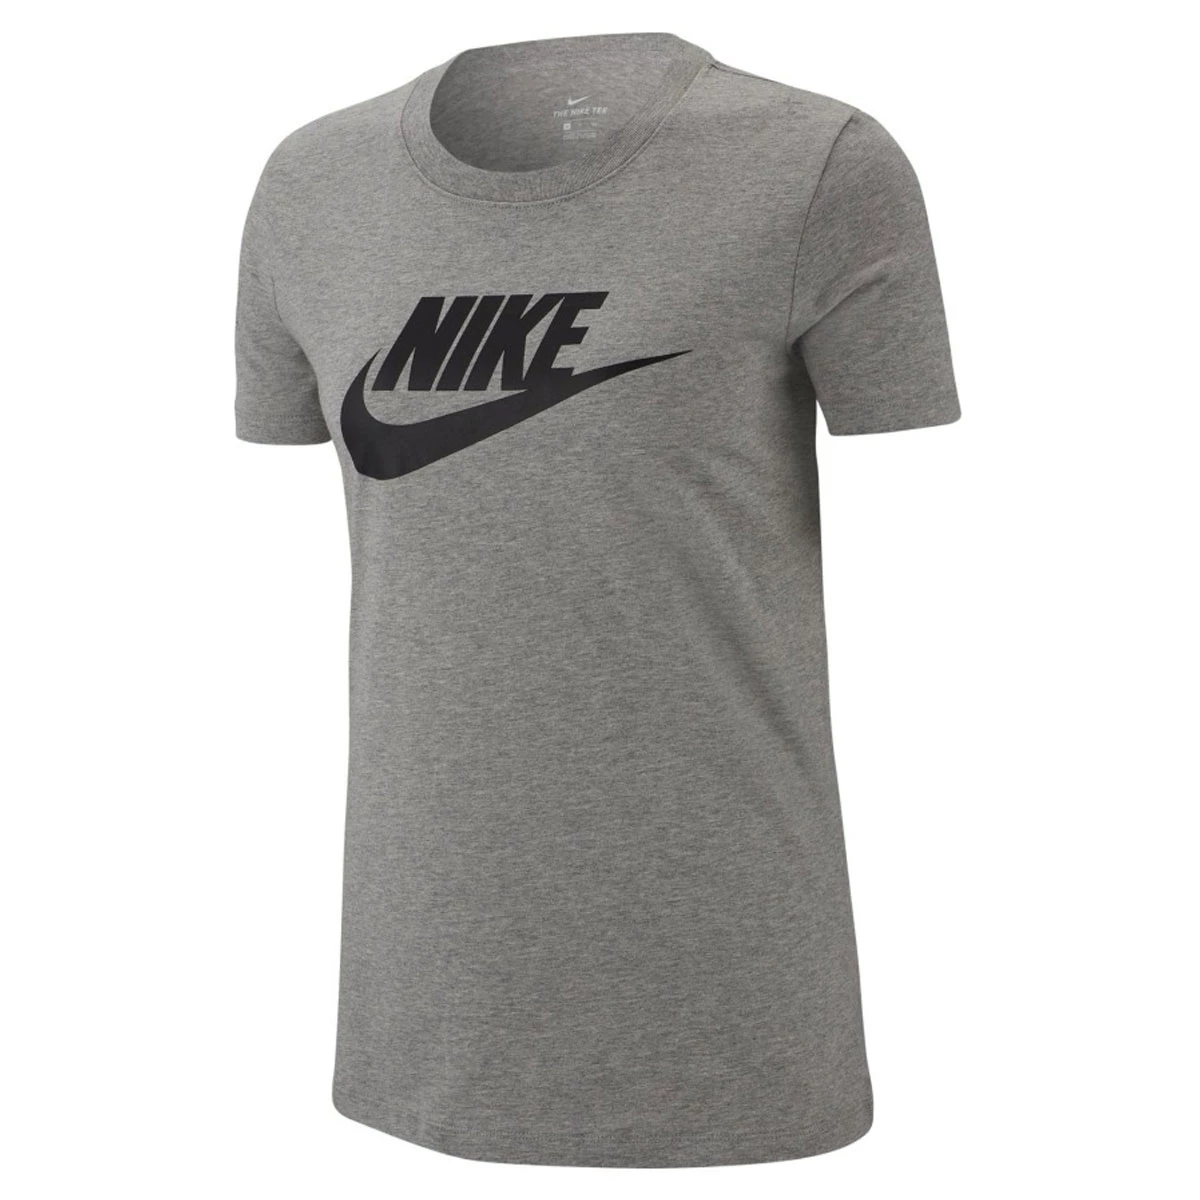 Afbeelding van Nike Sportswear essential icon future t-shirt